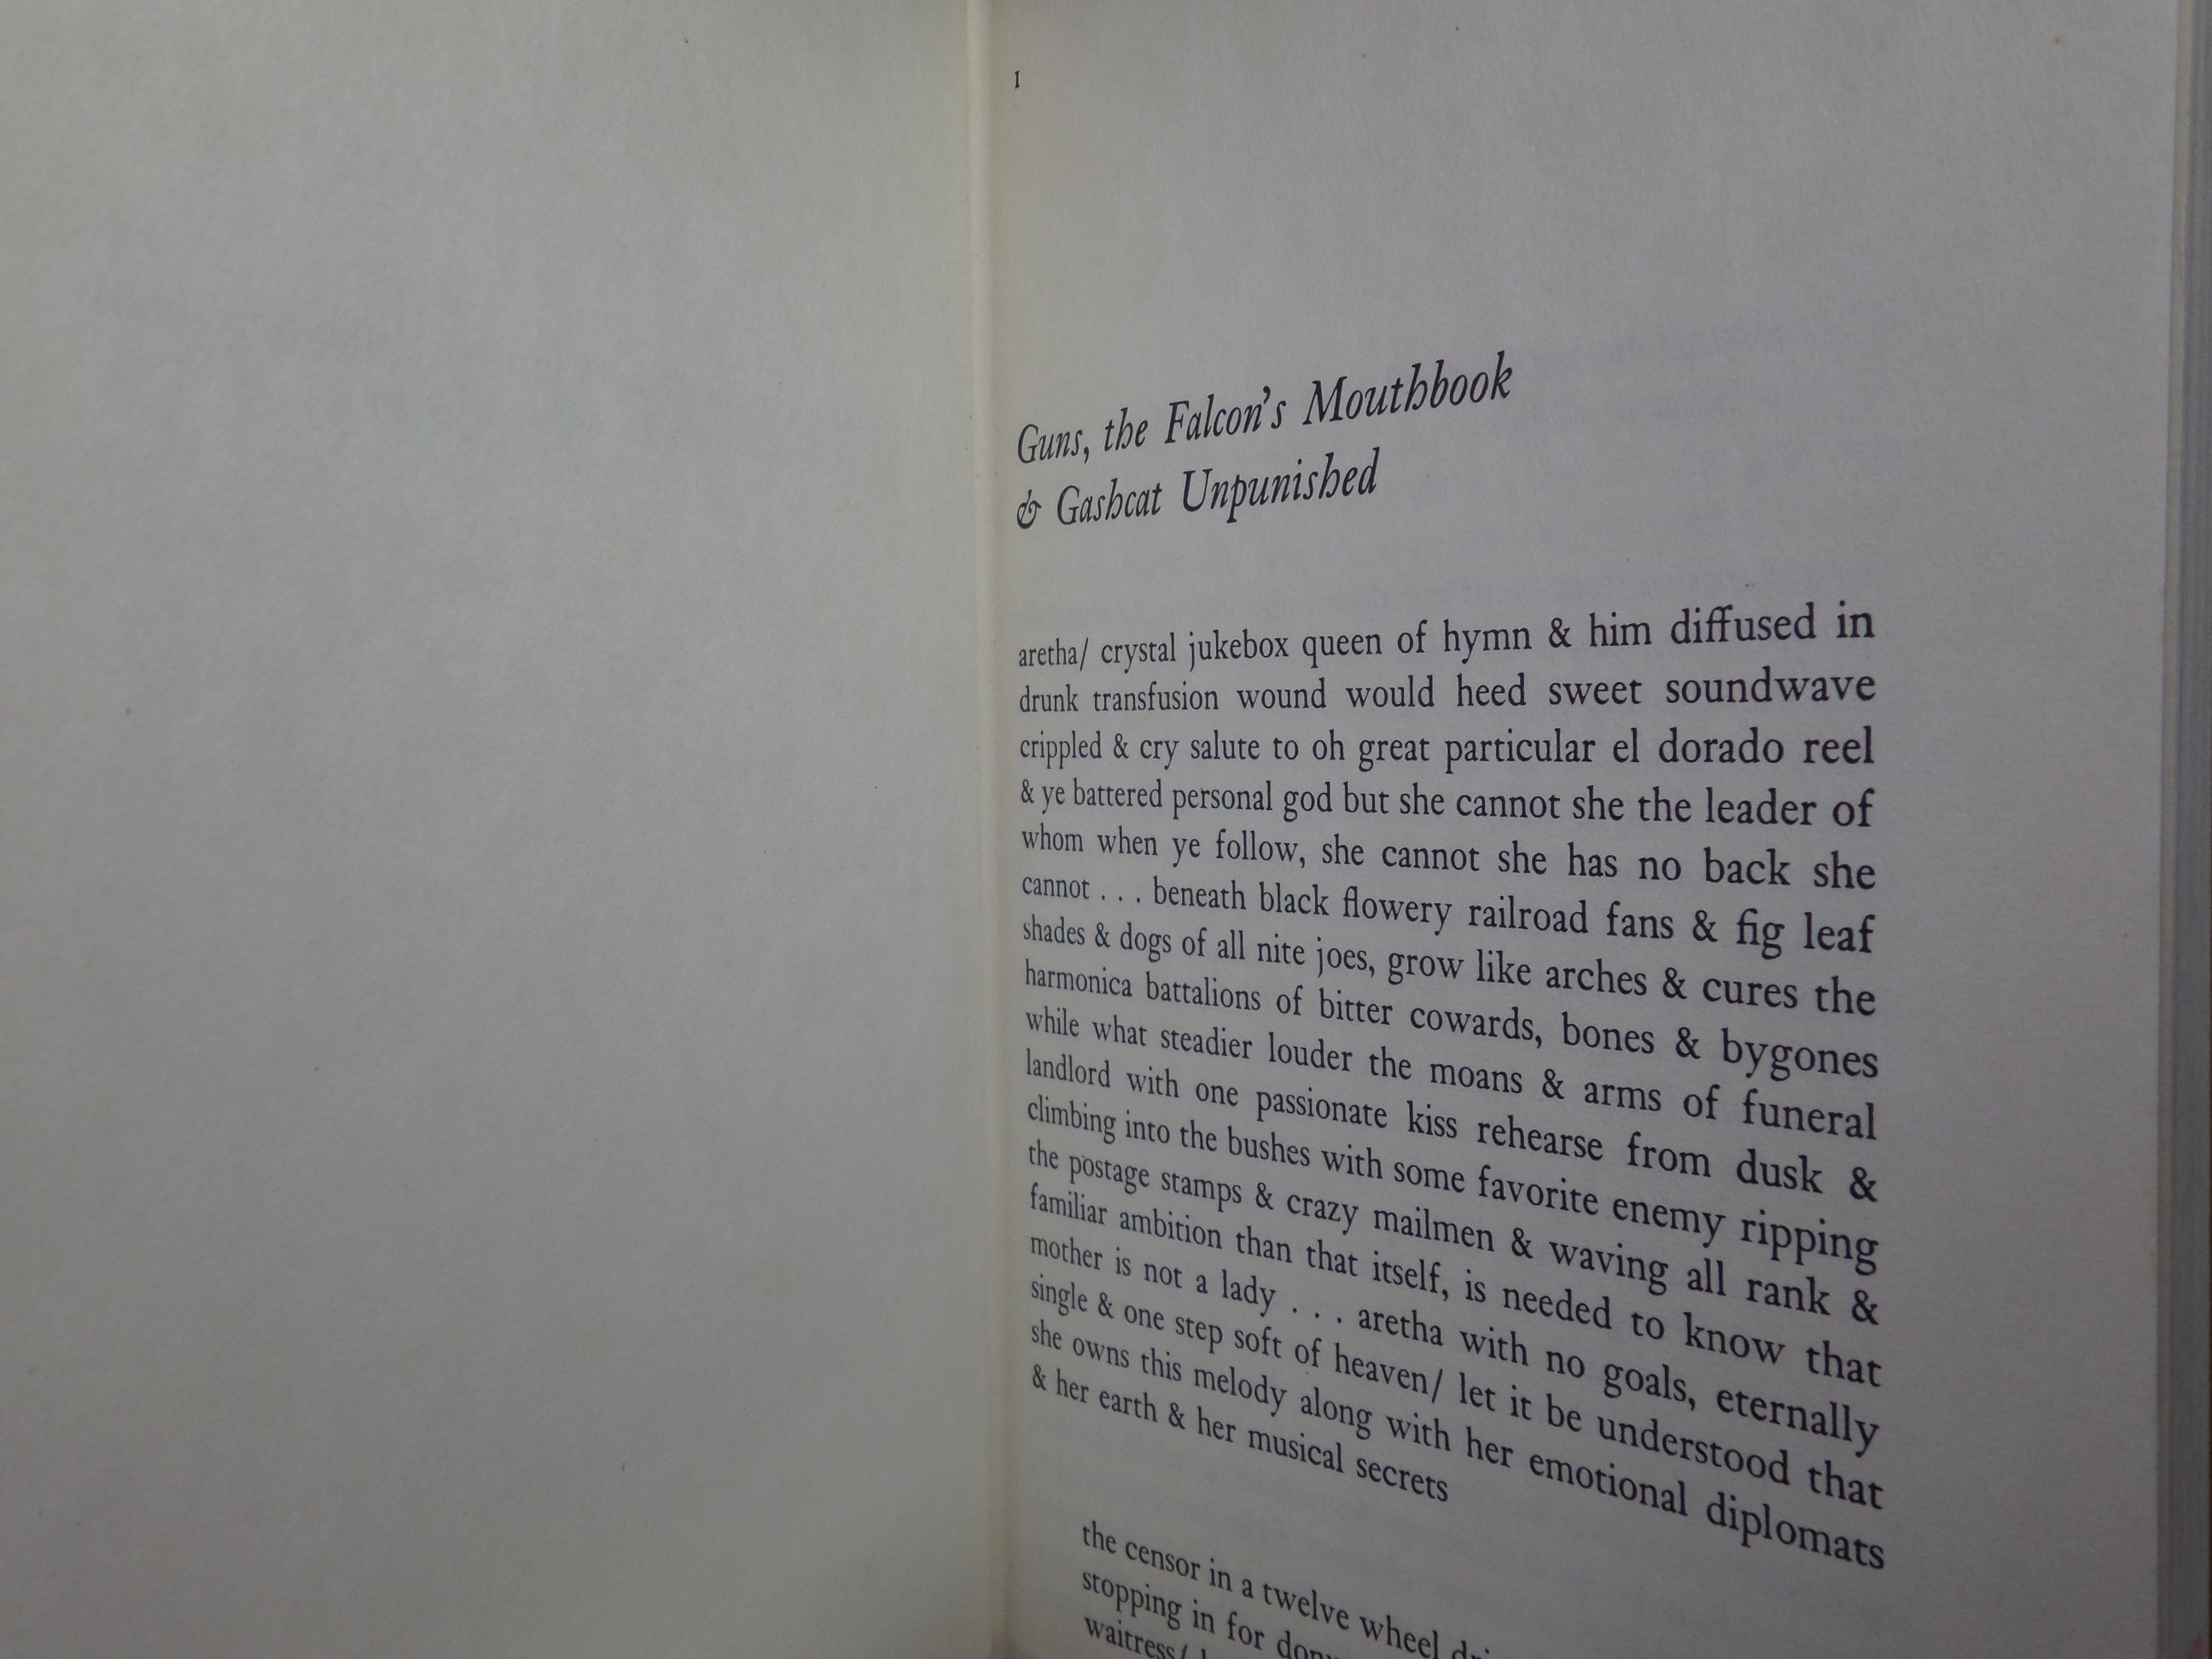 TARANTULA BY BOB DYLAN 1971 FIRST UK EDITION, HARDBACK WITH DUST JACKET